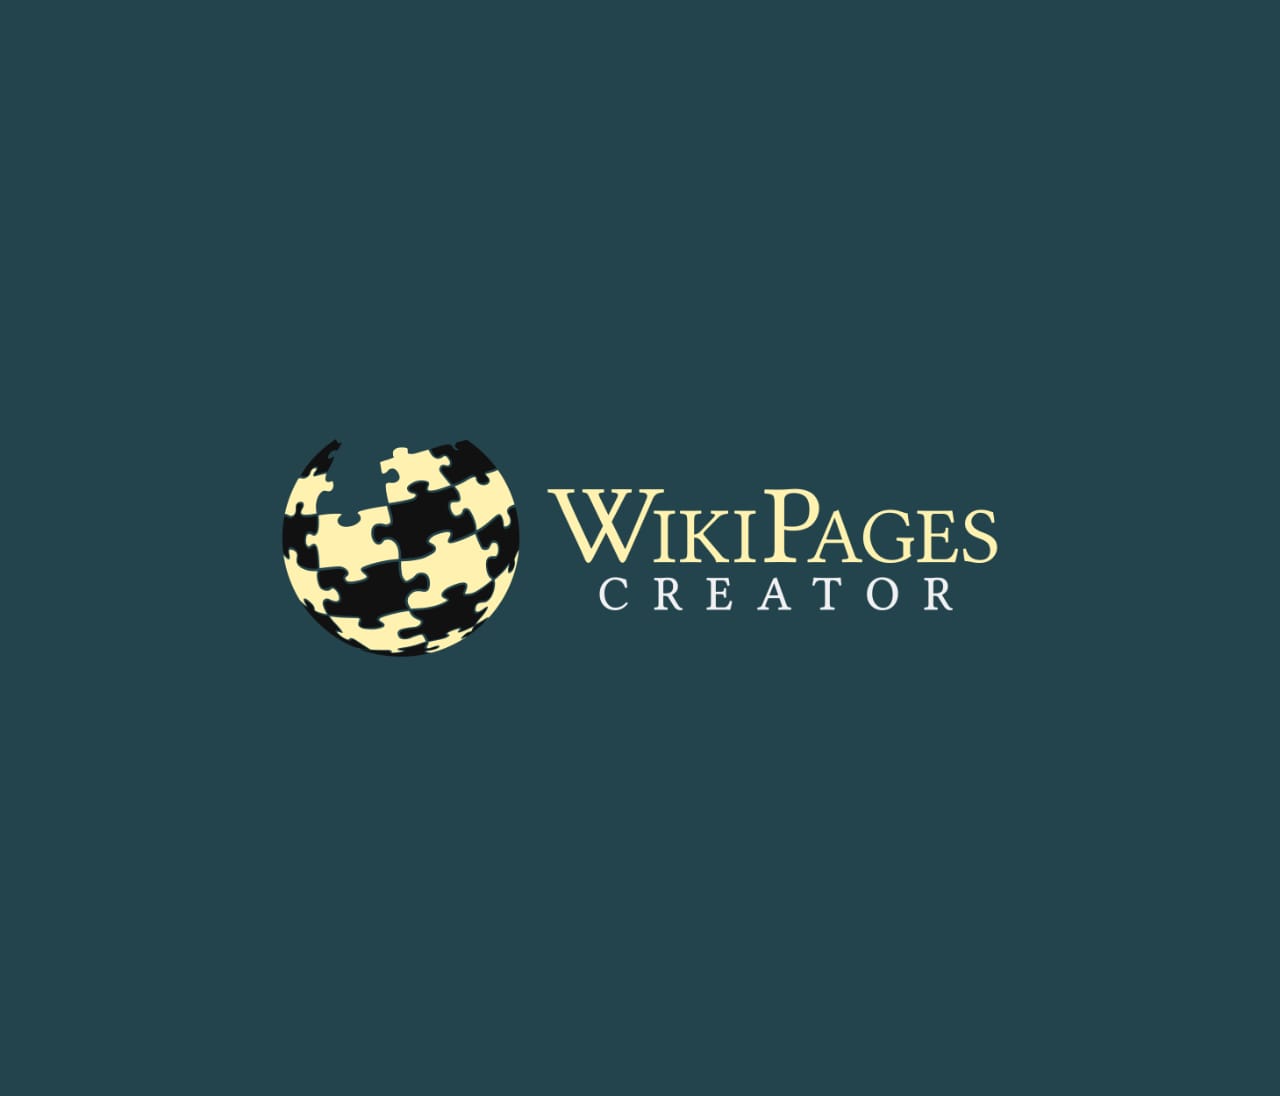 Wikipagescreator.com logo.jpeg